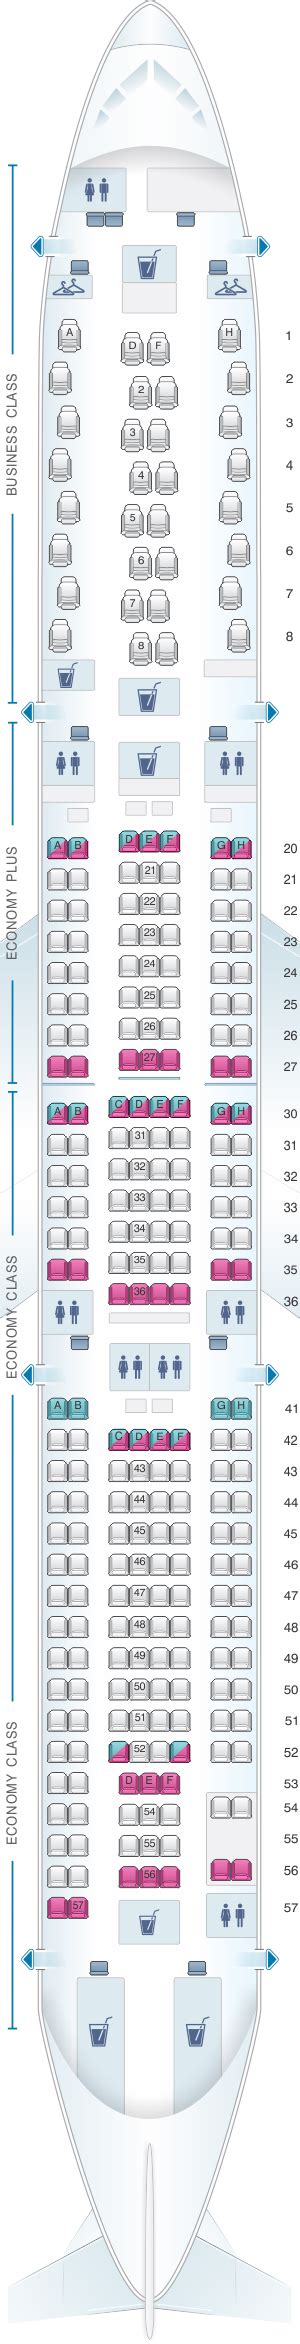 Seat Map Scandinavian Airlines Sas Airbus A330 300 Seatmaestro